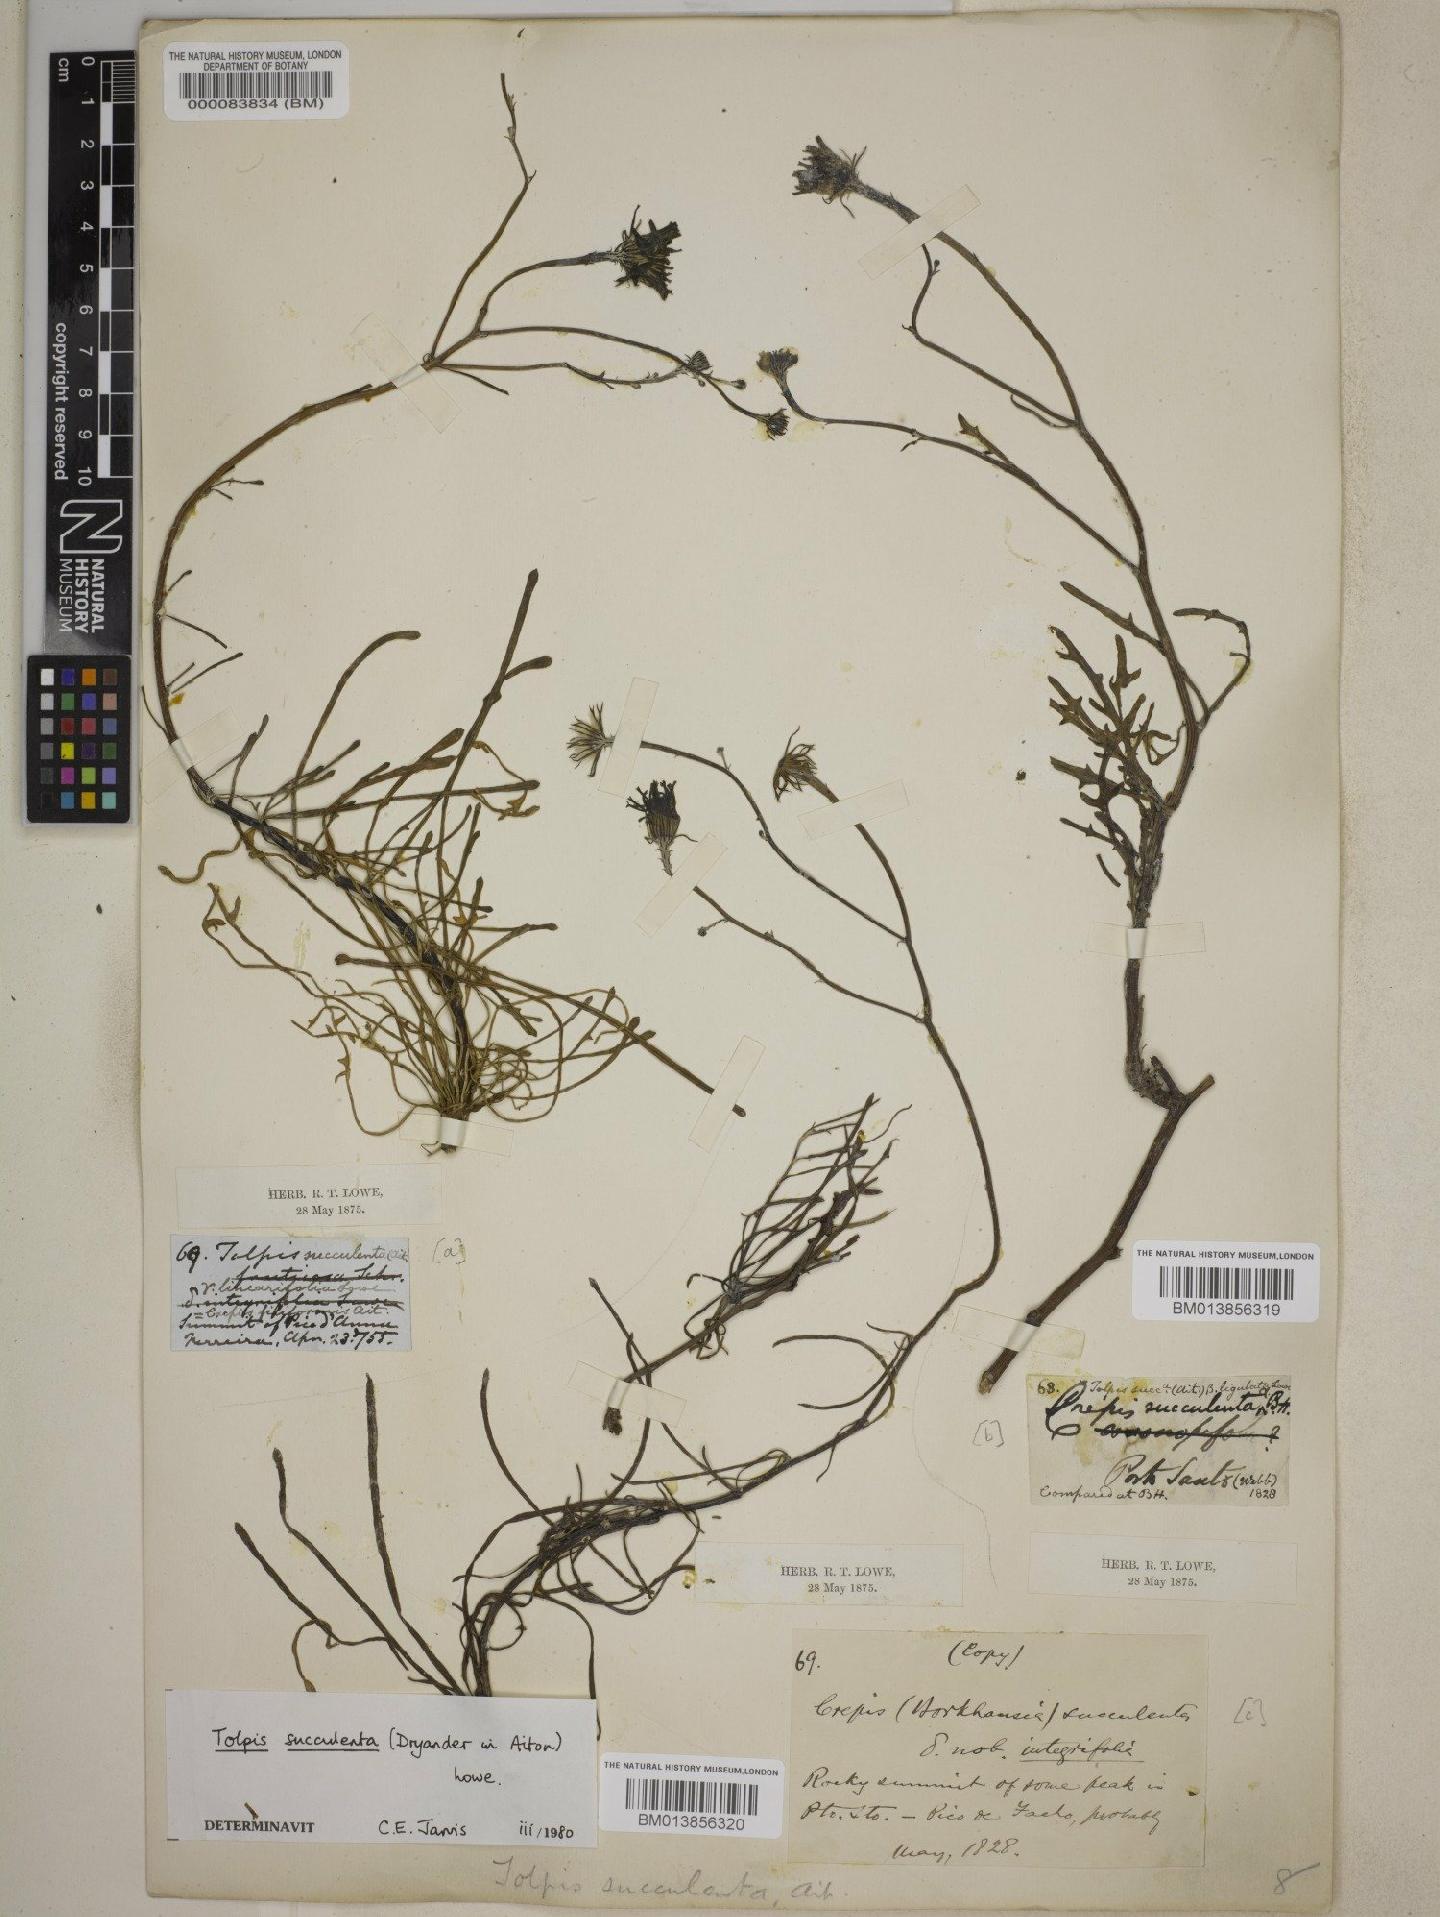 To NHMUK collection (Tolpis succulenta (Dryand. in Aiton) Lowe; NHMUK:ecatalogue:9073105)